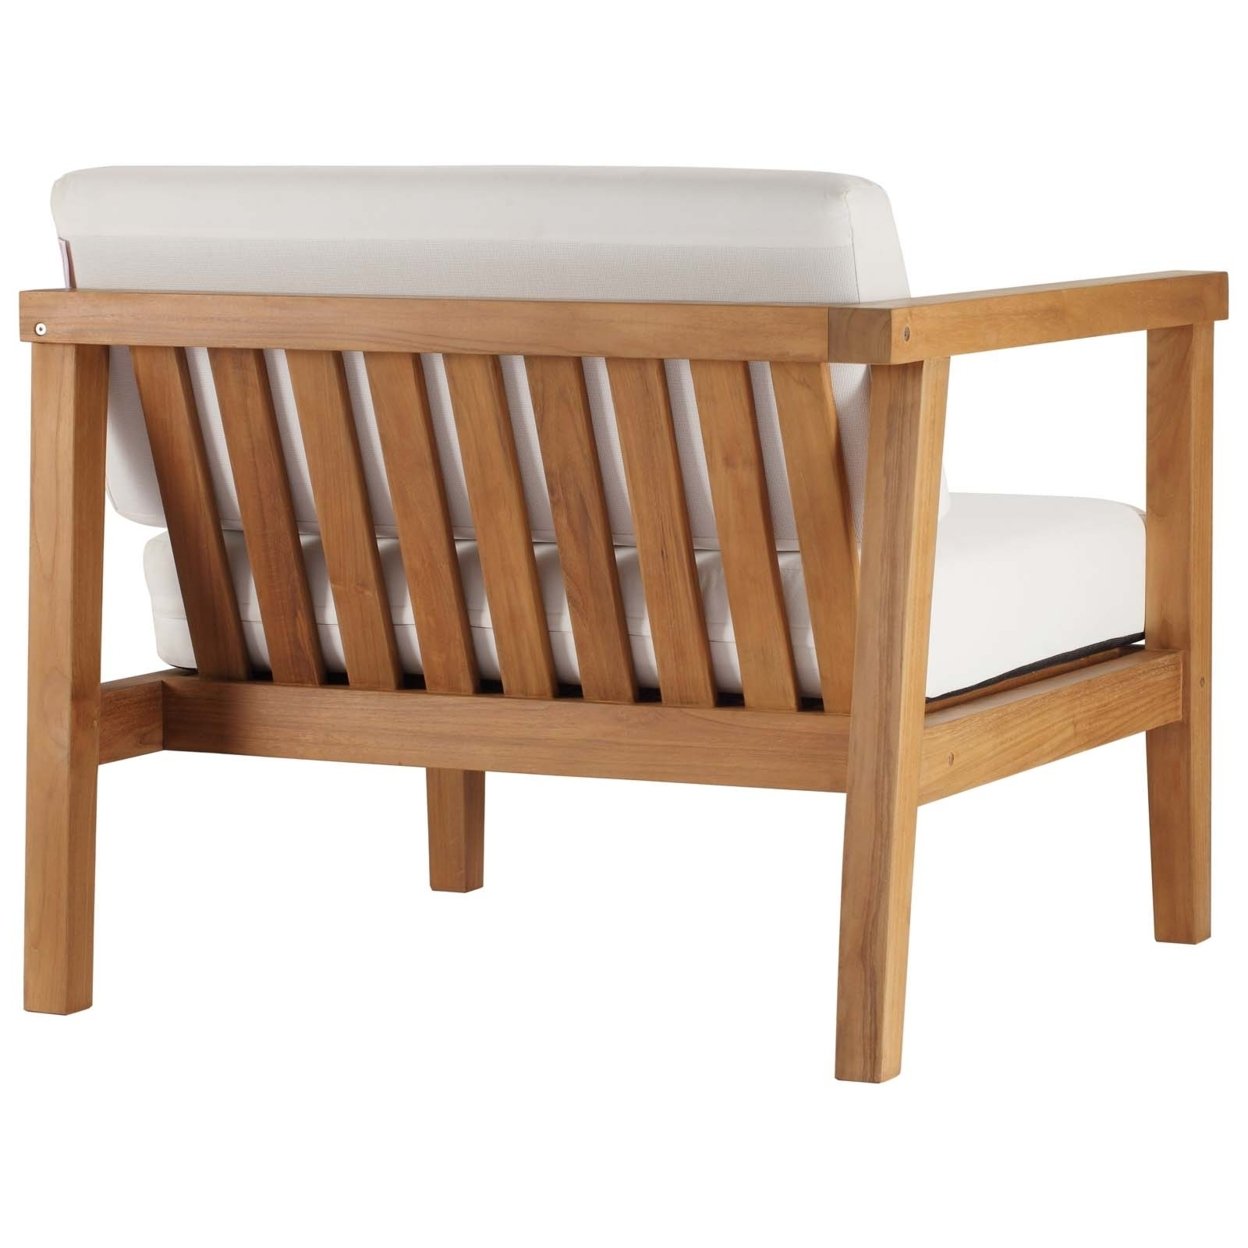 Bayport Outdoor Patio Teak Wood Left-Arm Chair, Natural White